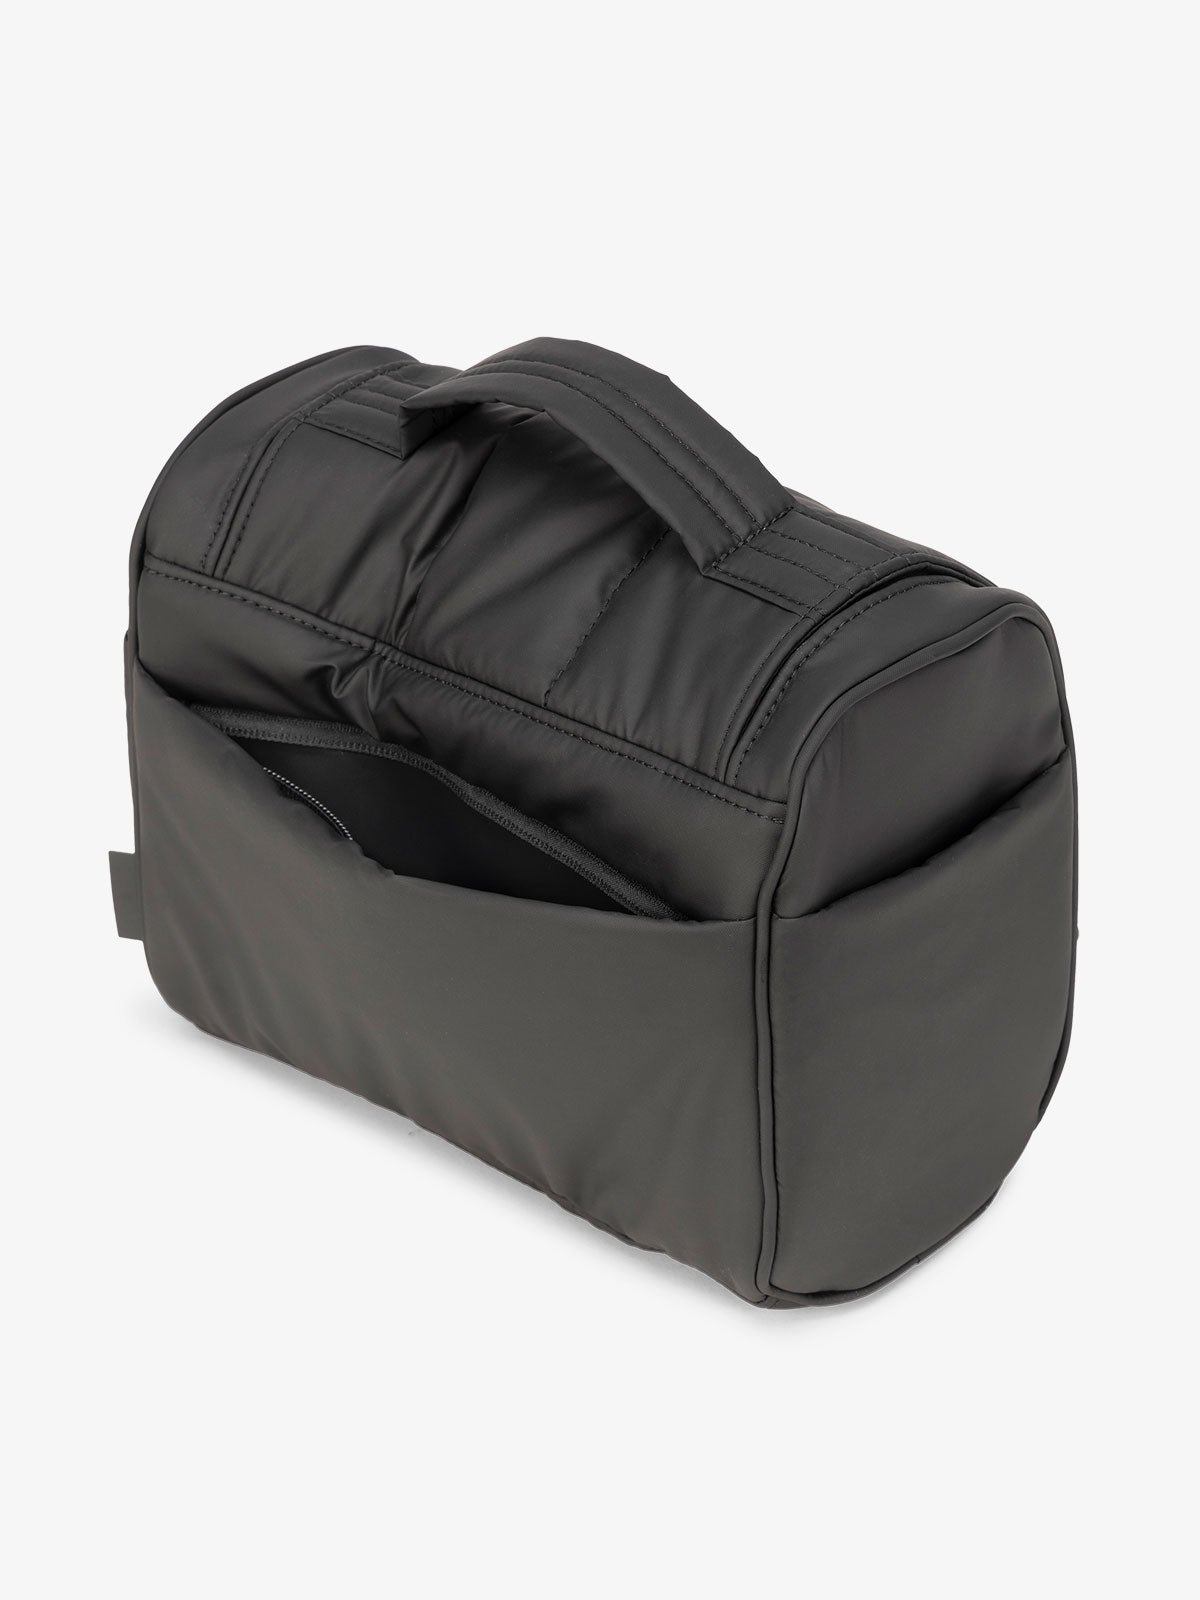 Matte black CALPAK Luka Hanging Toiletry Bag featuring additional secure zippered back pocket